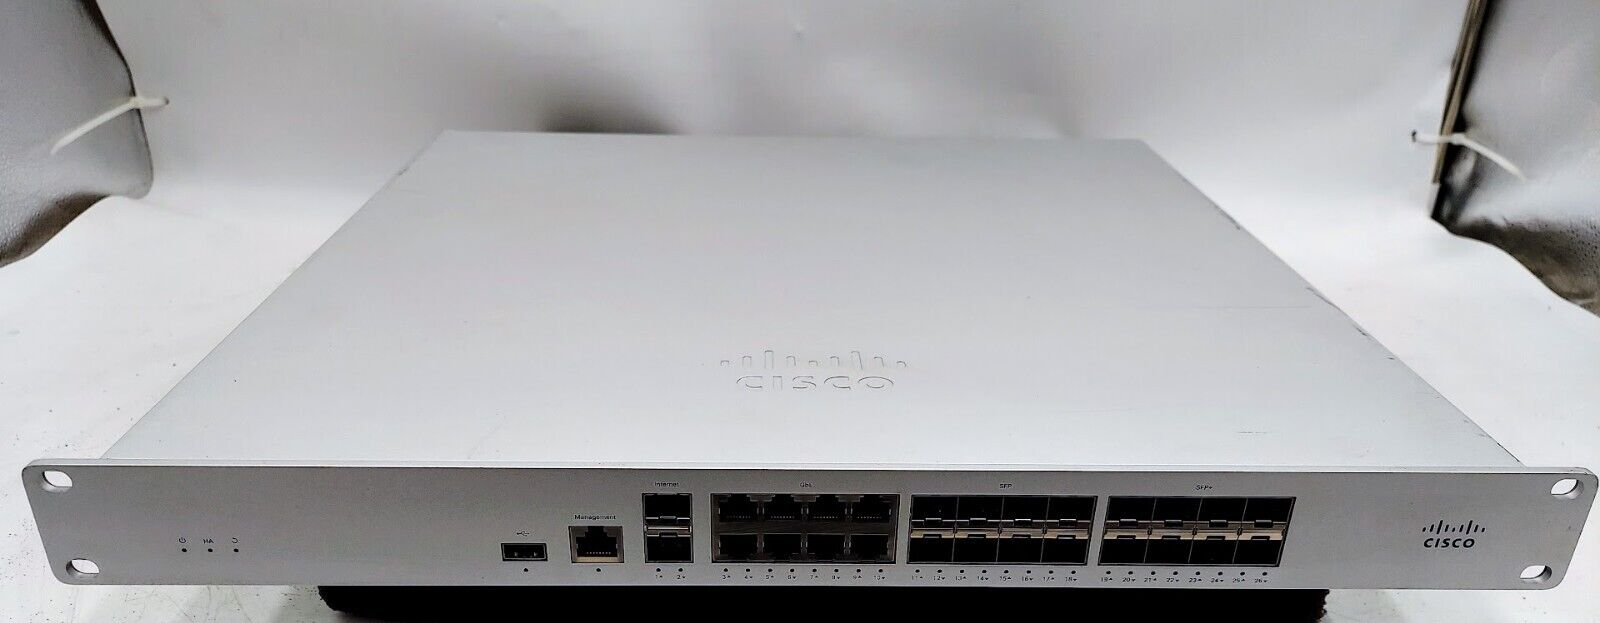 Cisco Meraki MX250-HW Cloud Managed Security Appliance UNCLAIMED